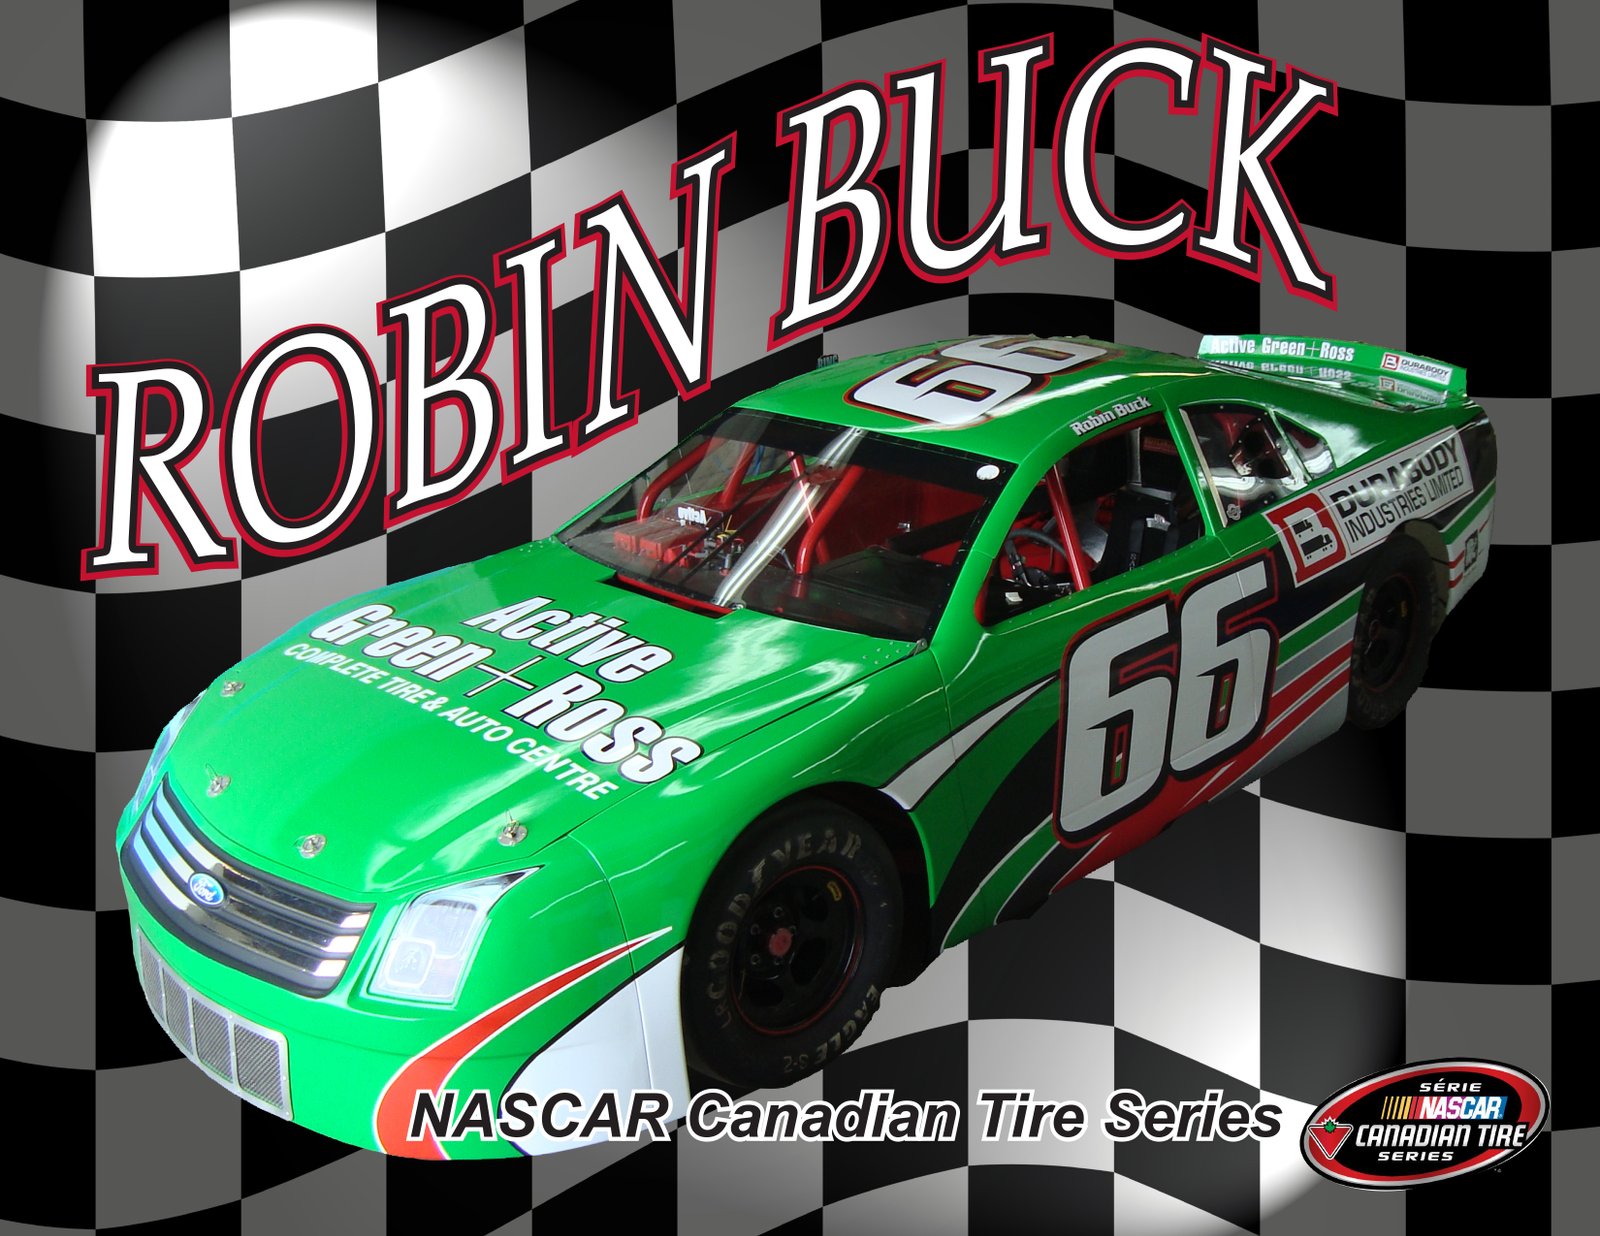 Robin Buck hero card